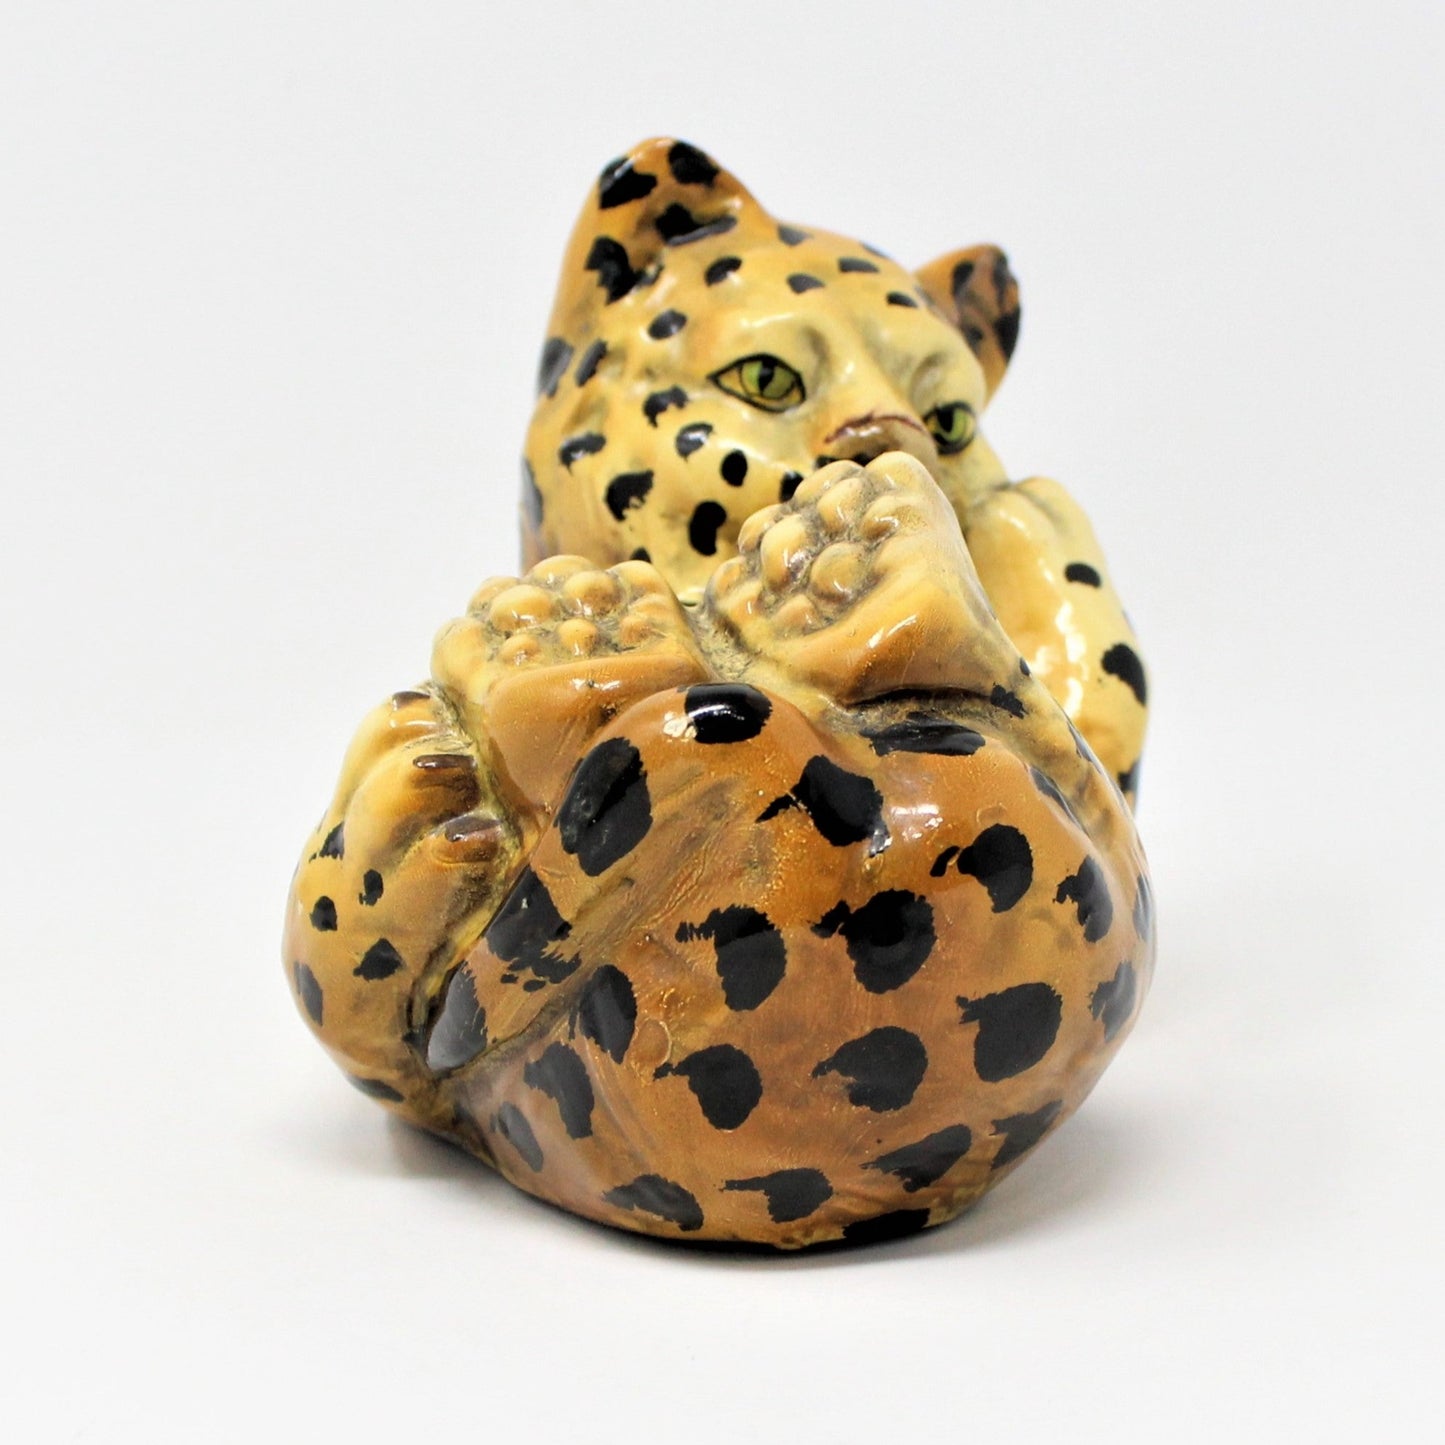 Sculpture, Leopard /Cheetah Cub, Portugal Ceramic, Vintage, SOLD